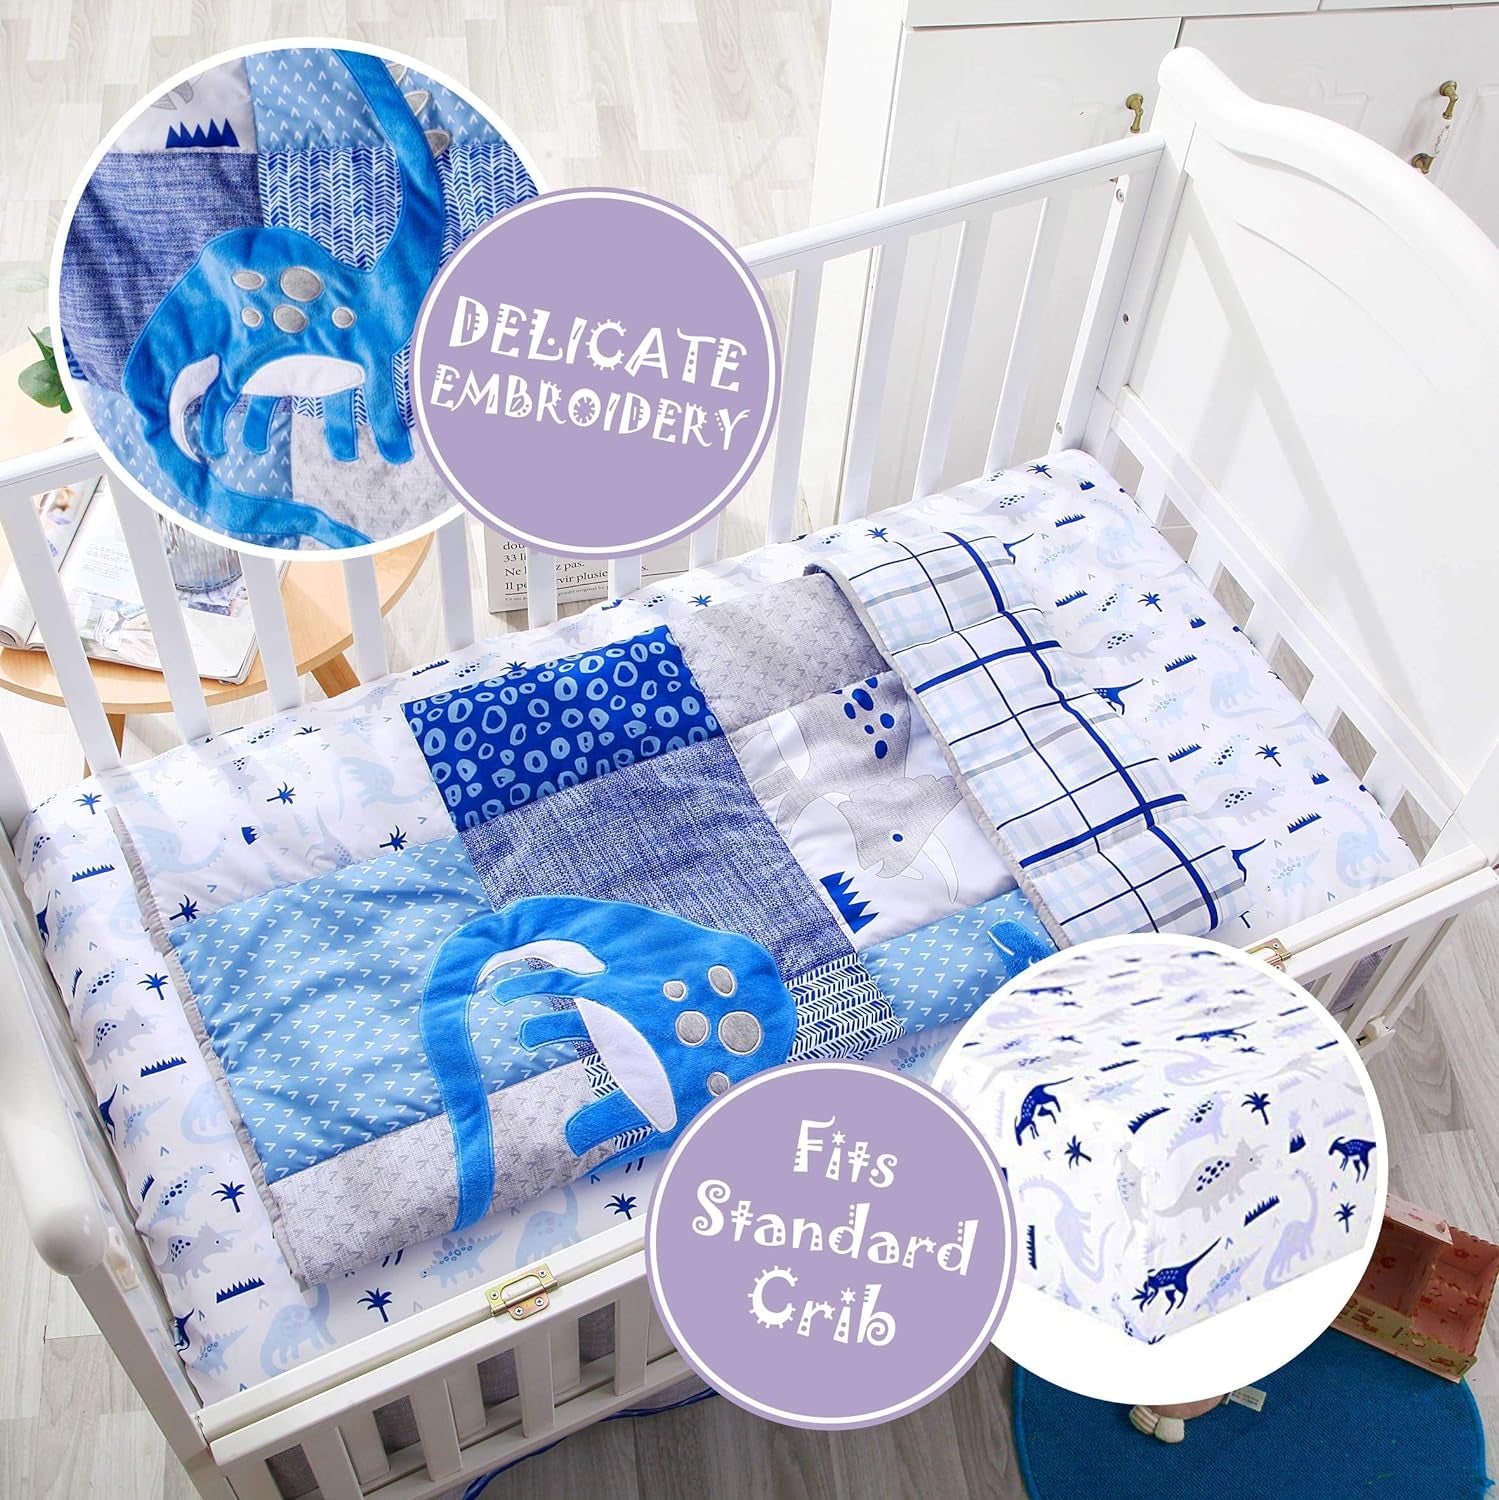 3 Piece Baby Crib Bedding Set, Dinosaur Standard Size Crib Set, Nursery Bedding for Boys, Crib Sheet, Comforter, Crib Skirt, 28" X 52", Blue/Grey